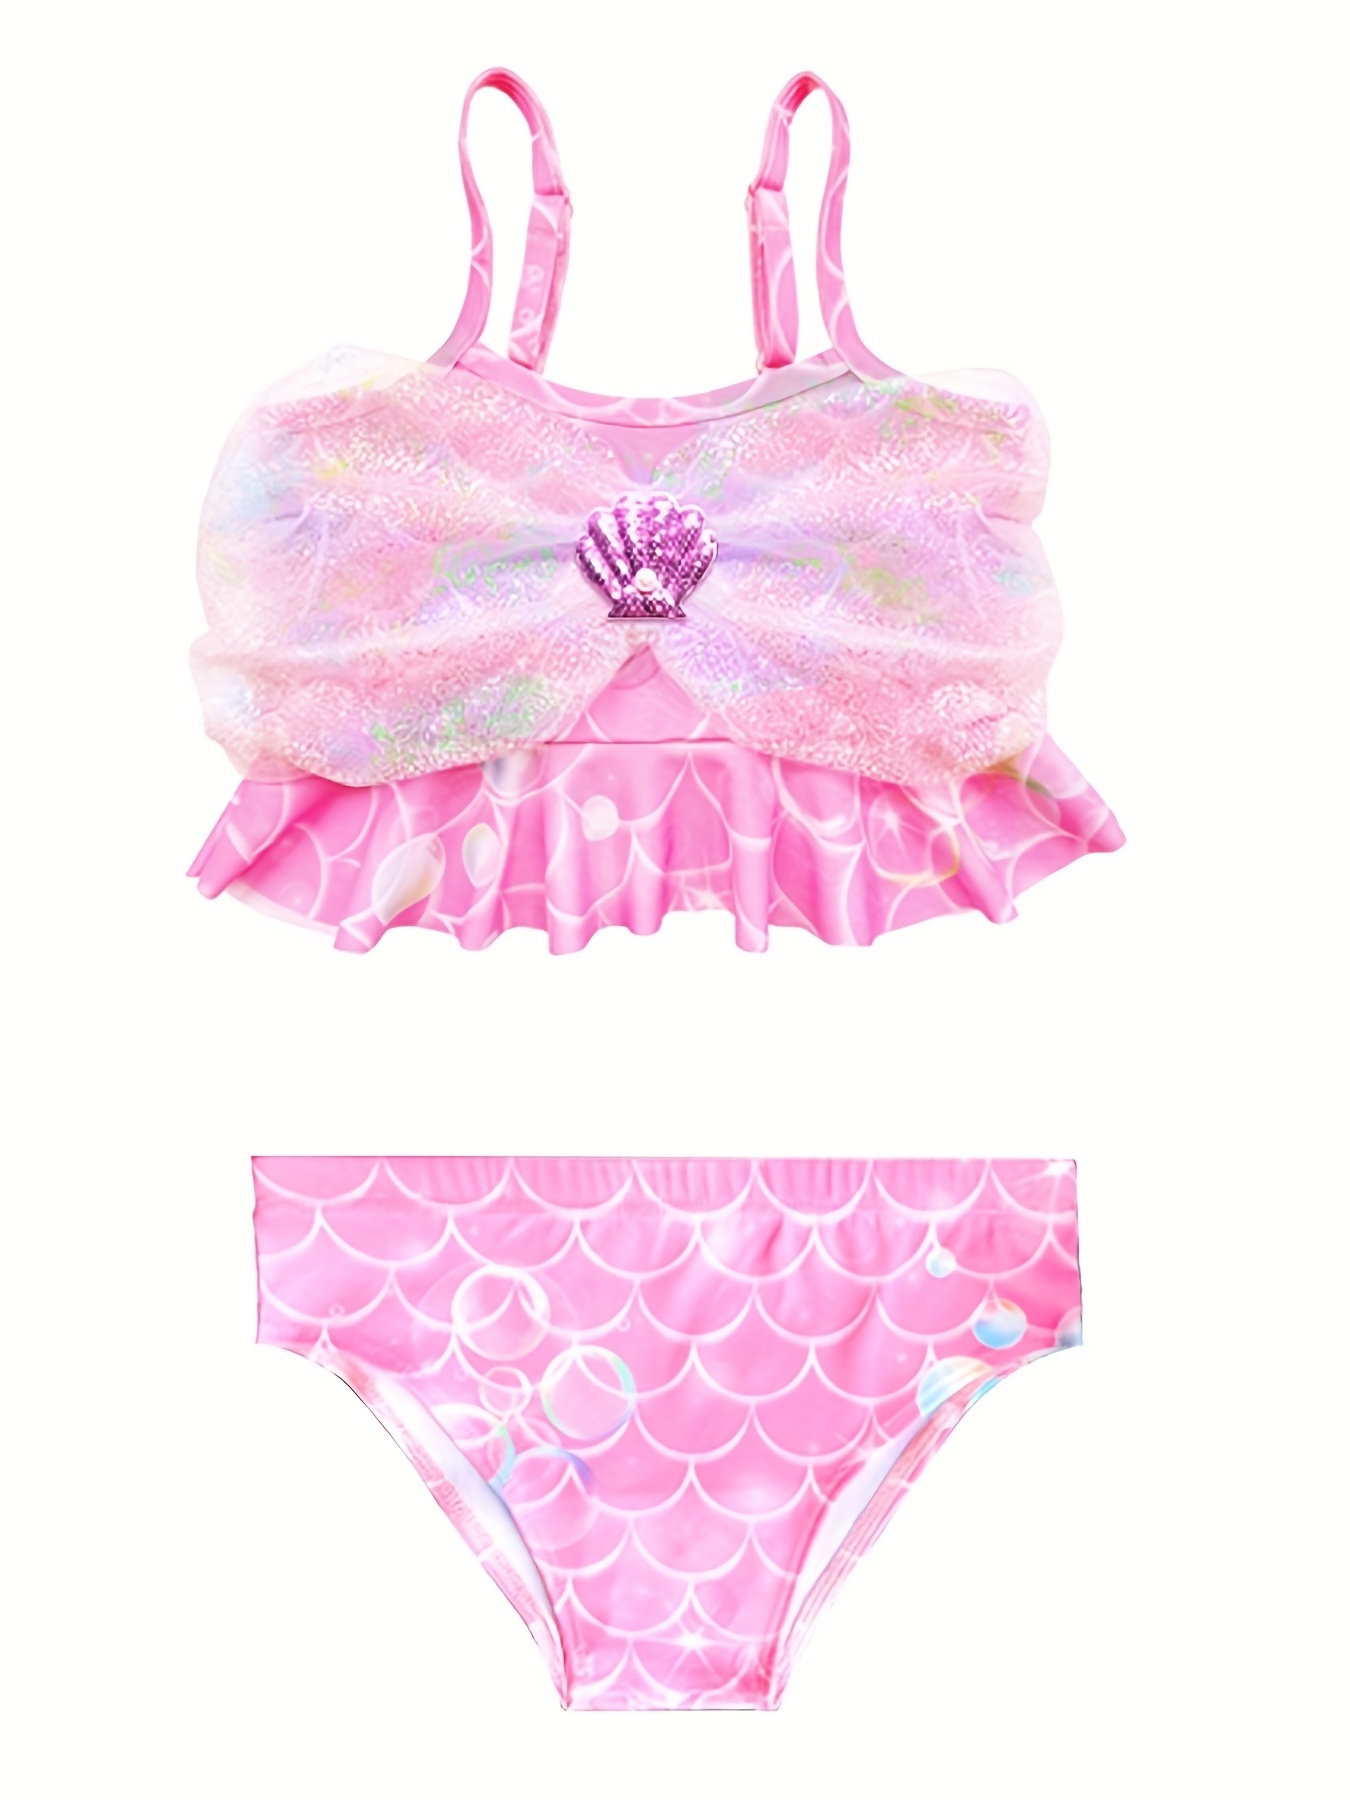 Buy Women's Poly Lycra Beach Innerwear Lingerie Bikini Set (28) Pink at